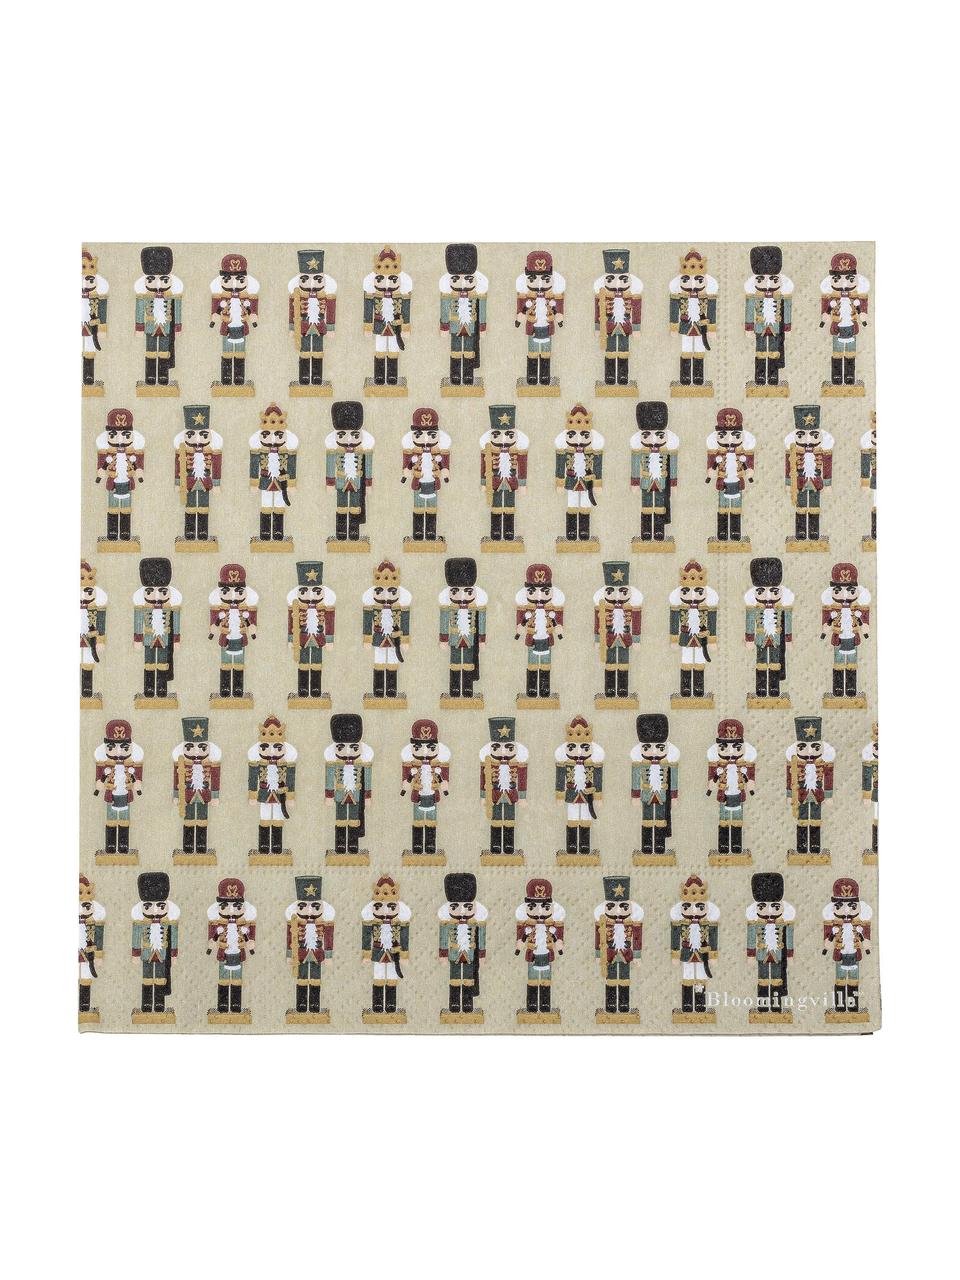 Papier-Servietten Darren mit Nussknacker-Motiven, 20 Stück, Papier, Beige, gemustert, B 33 x L 33 cm